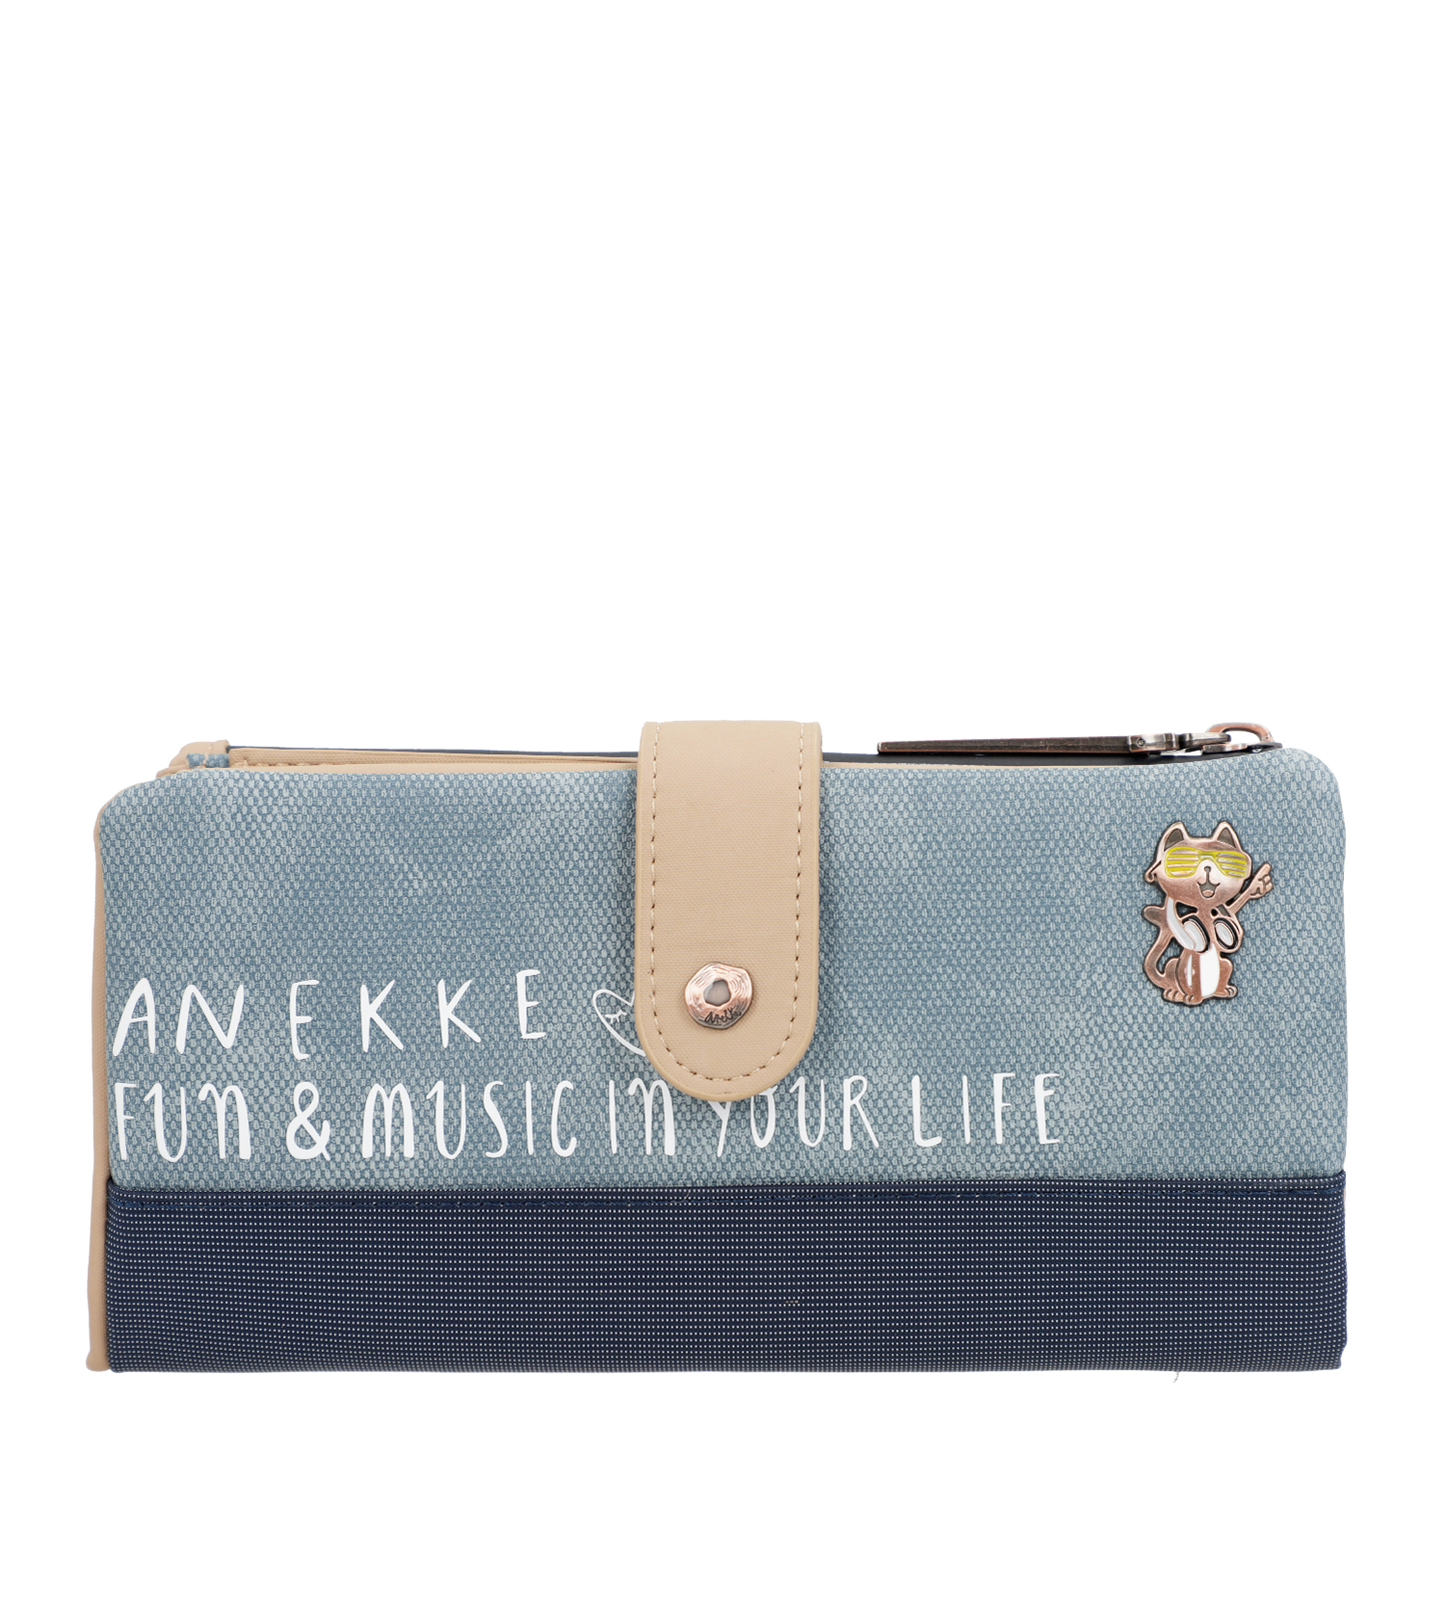 Anekke Fun & Music Nature Edition nagyméretű pénztárca